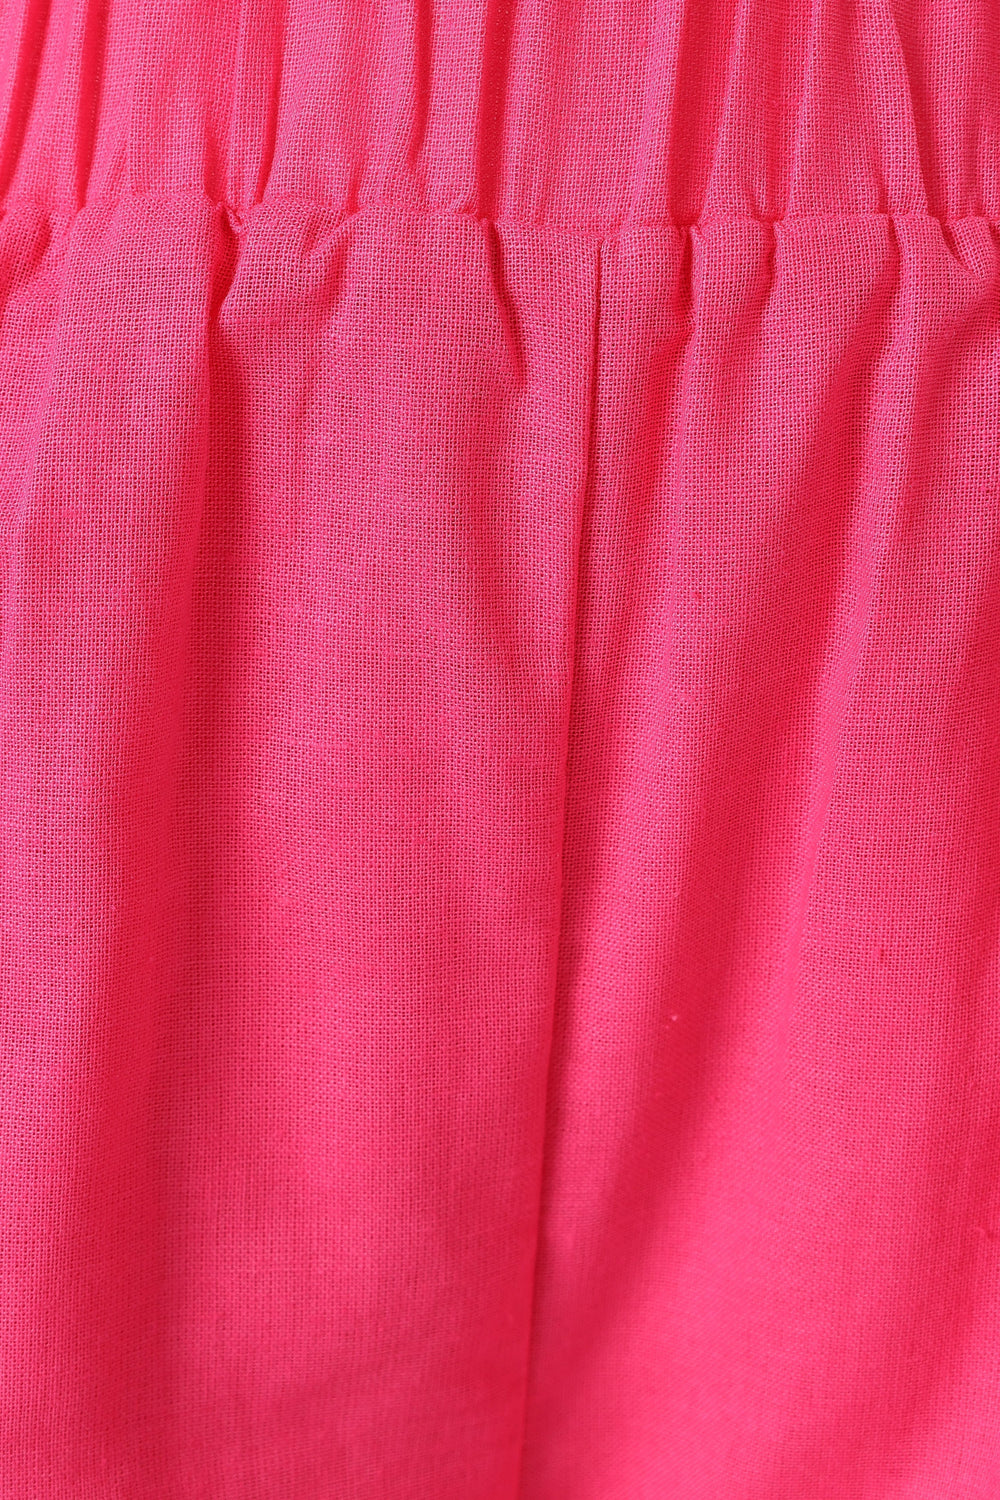 Petal and Pup USA BOTTOMS Lyra Shorts - Hot Pink